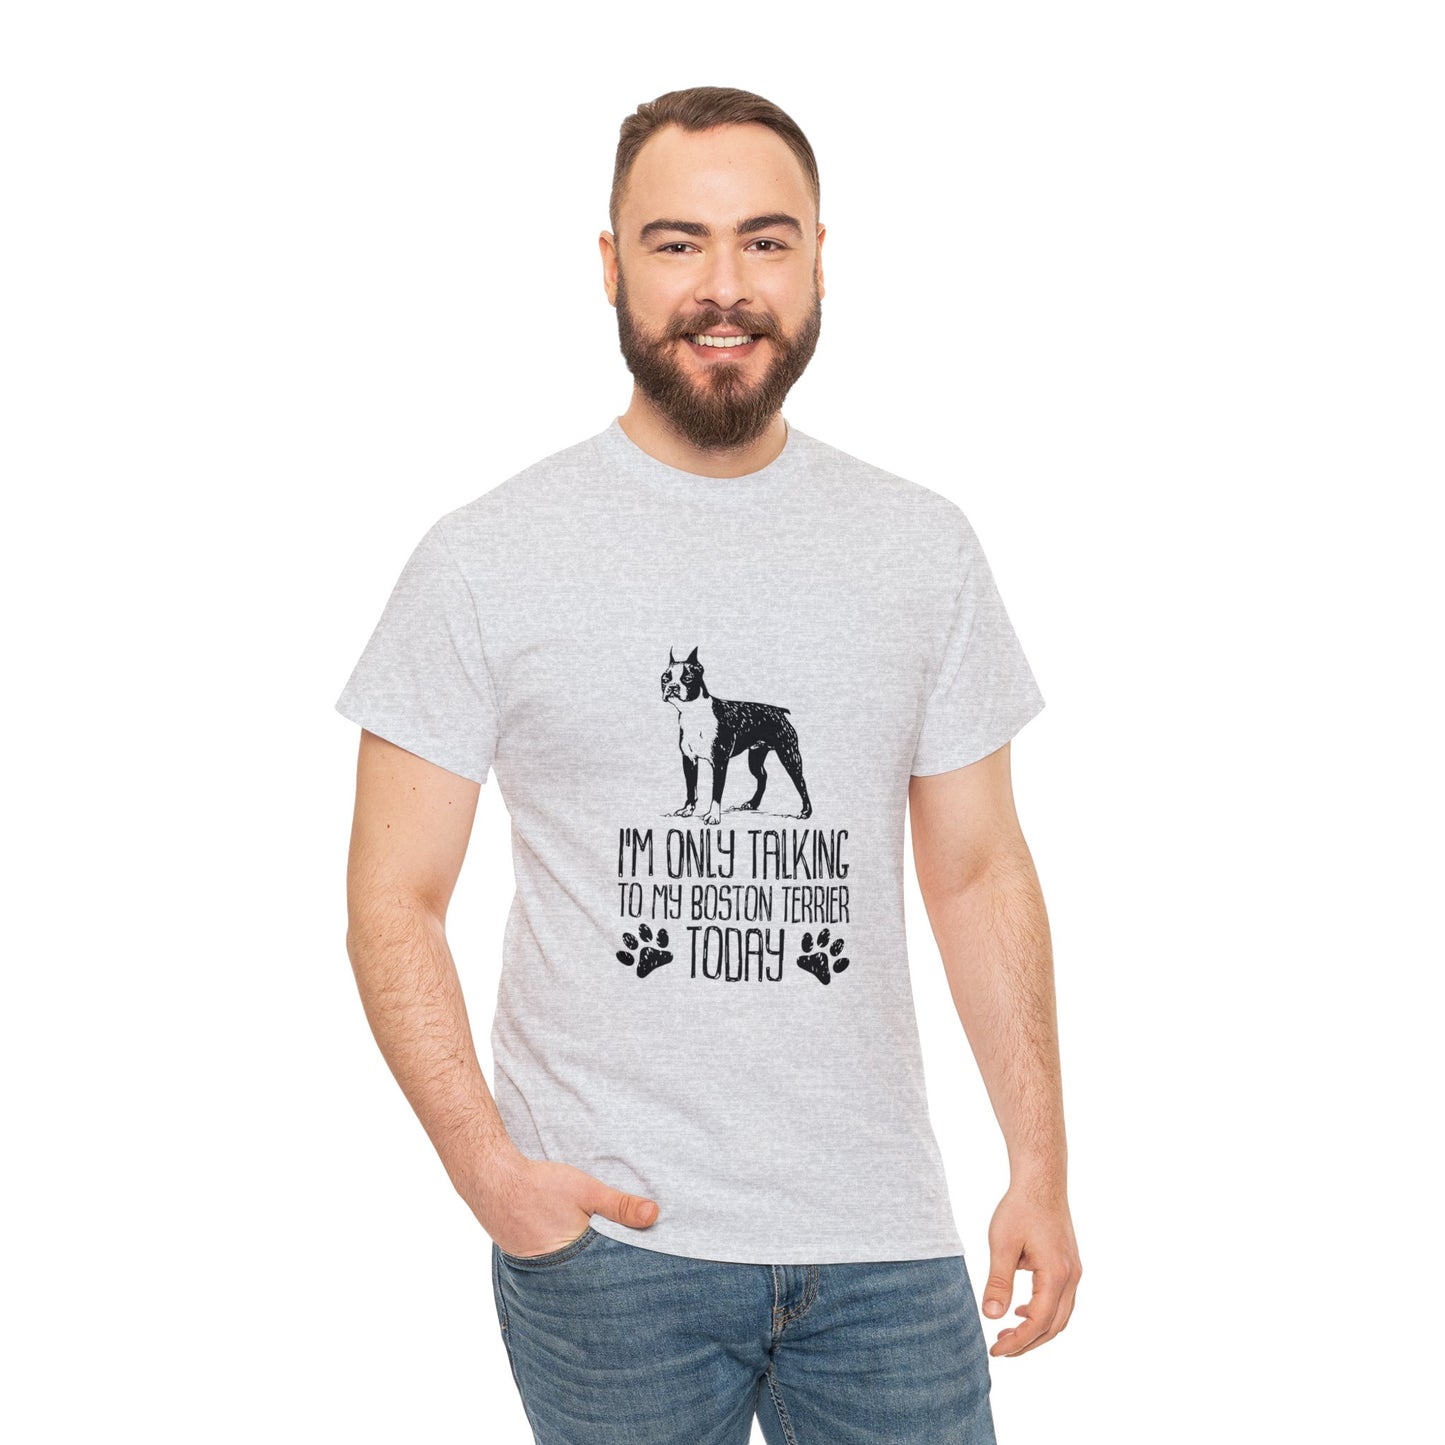 Apollo - Unisex Tshirts for Boston Terrier Lovers